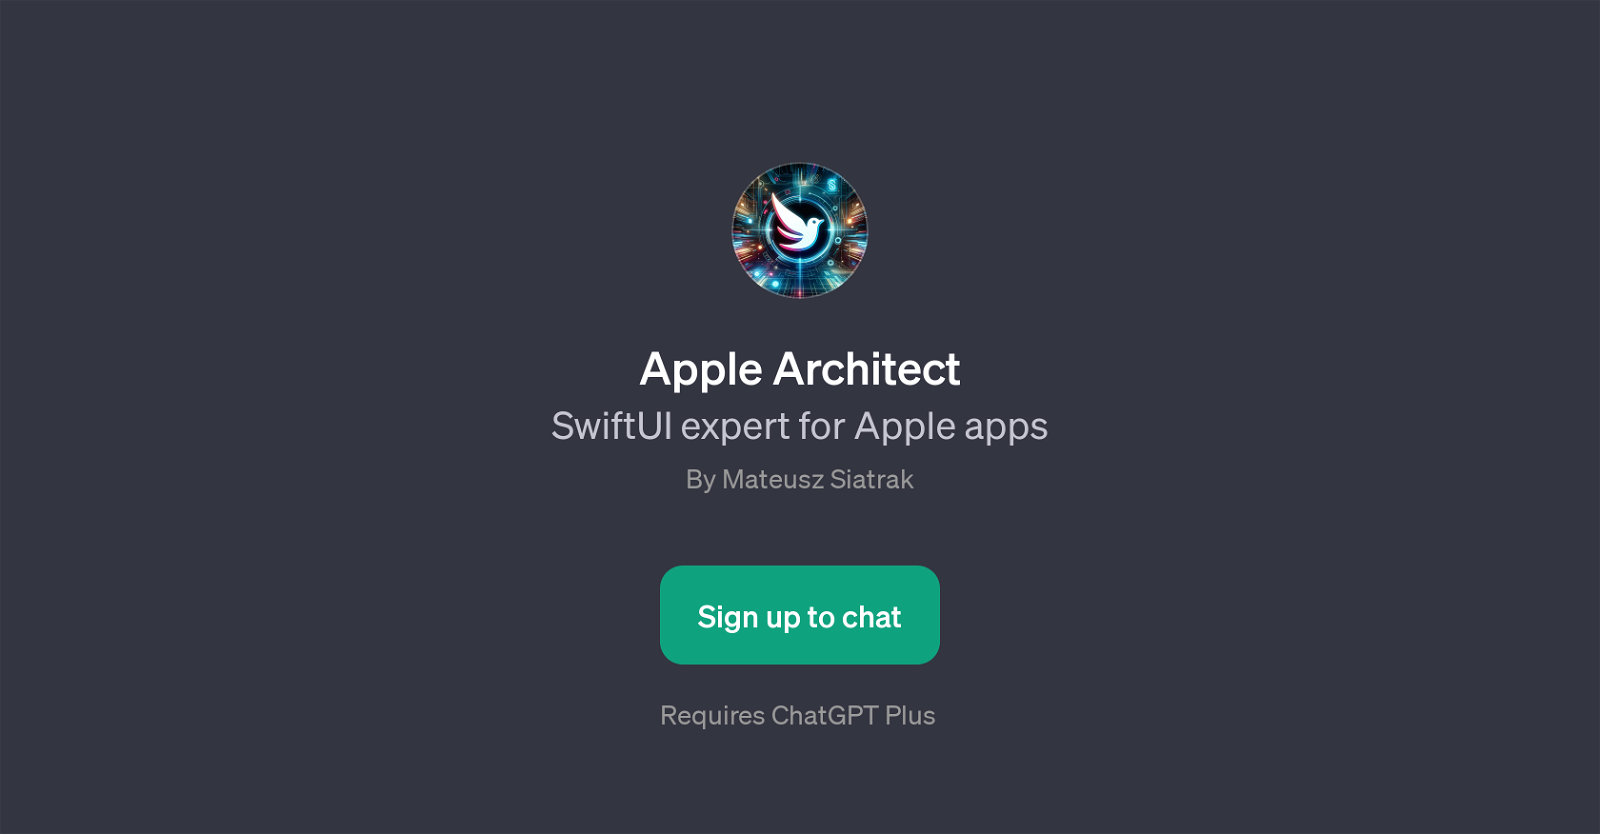 Apple Architect website